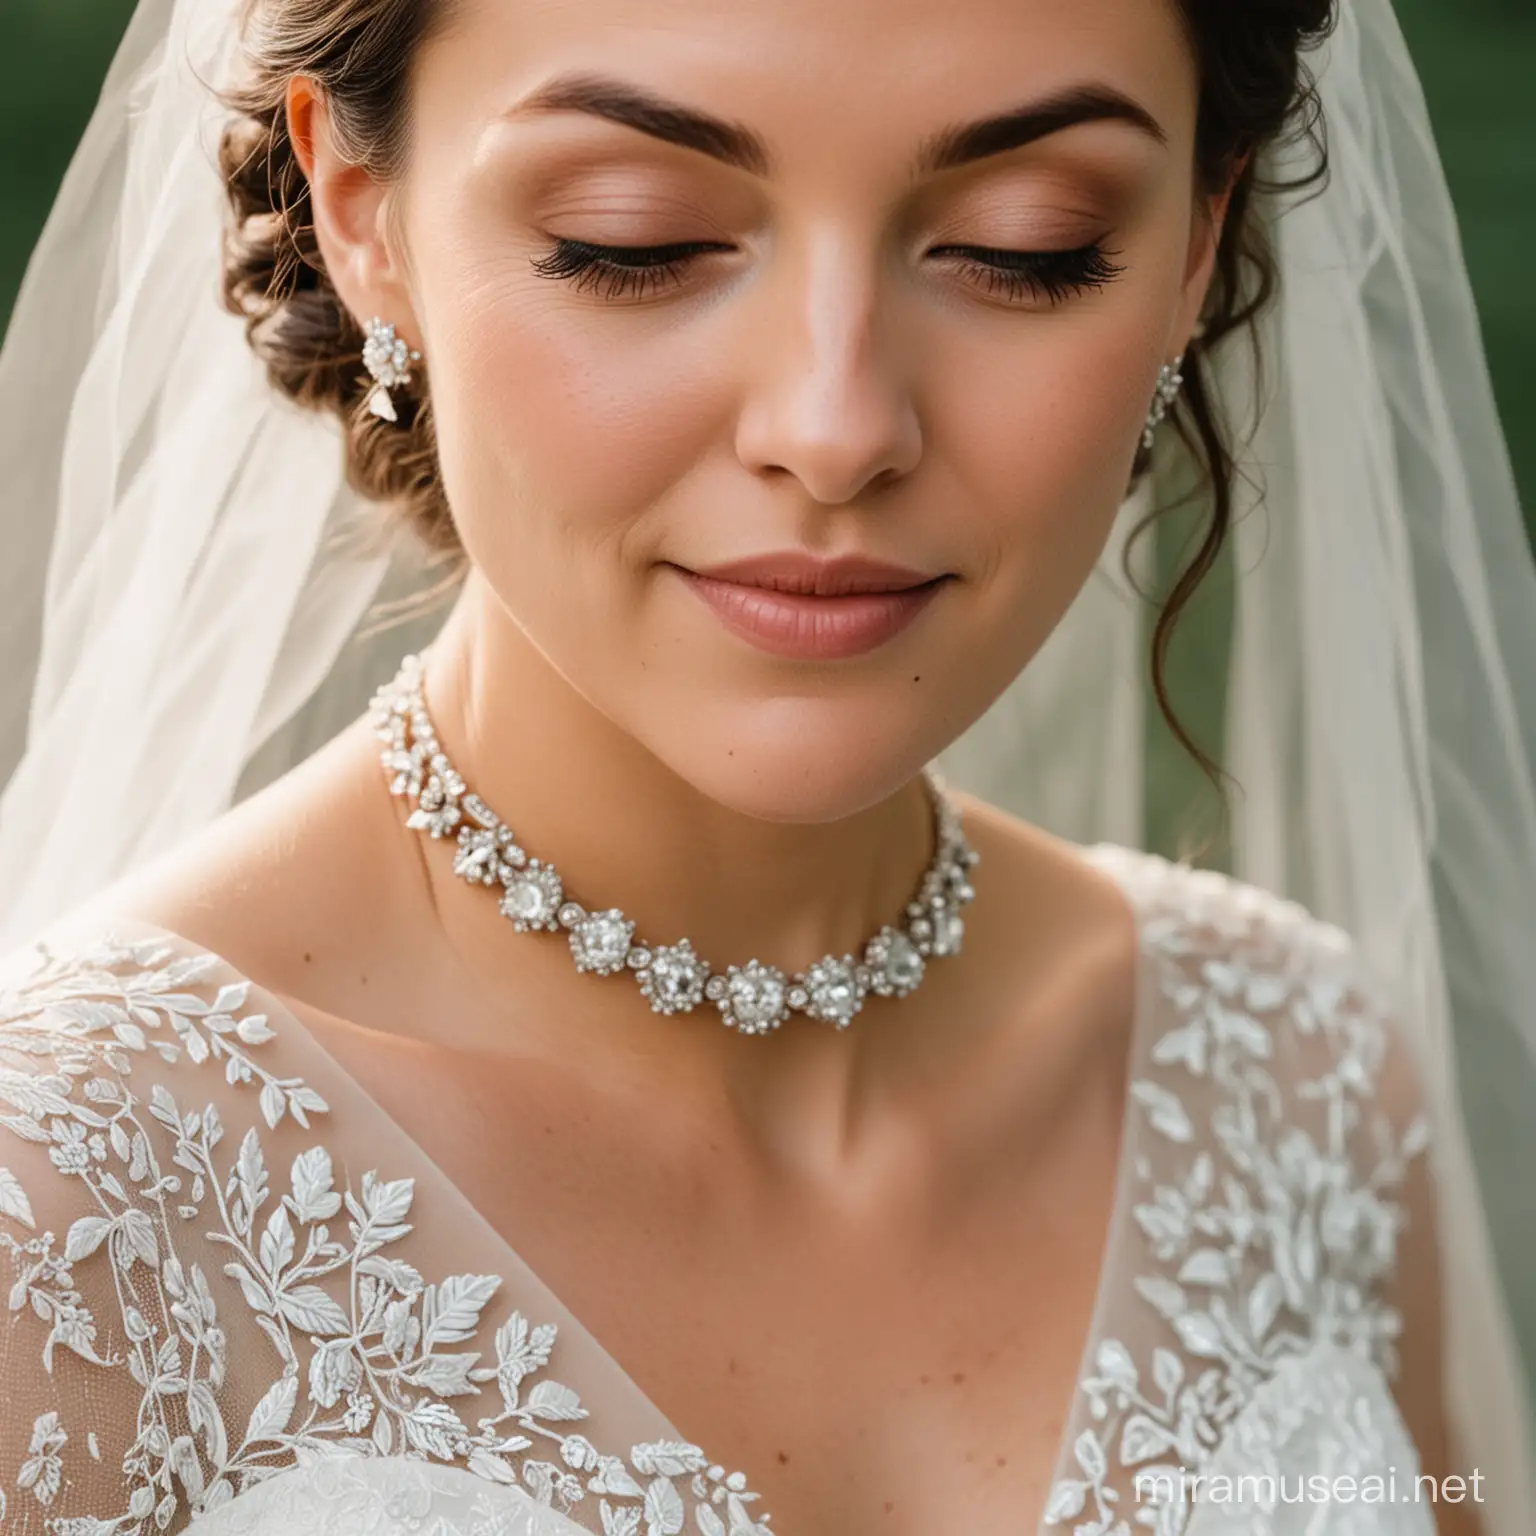 Elegant Bride Adorned in Exquisite Heirloom Jewelry